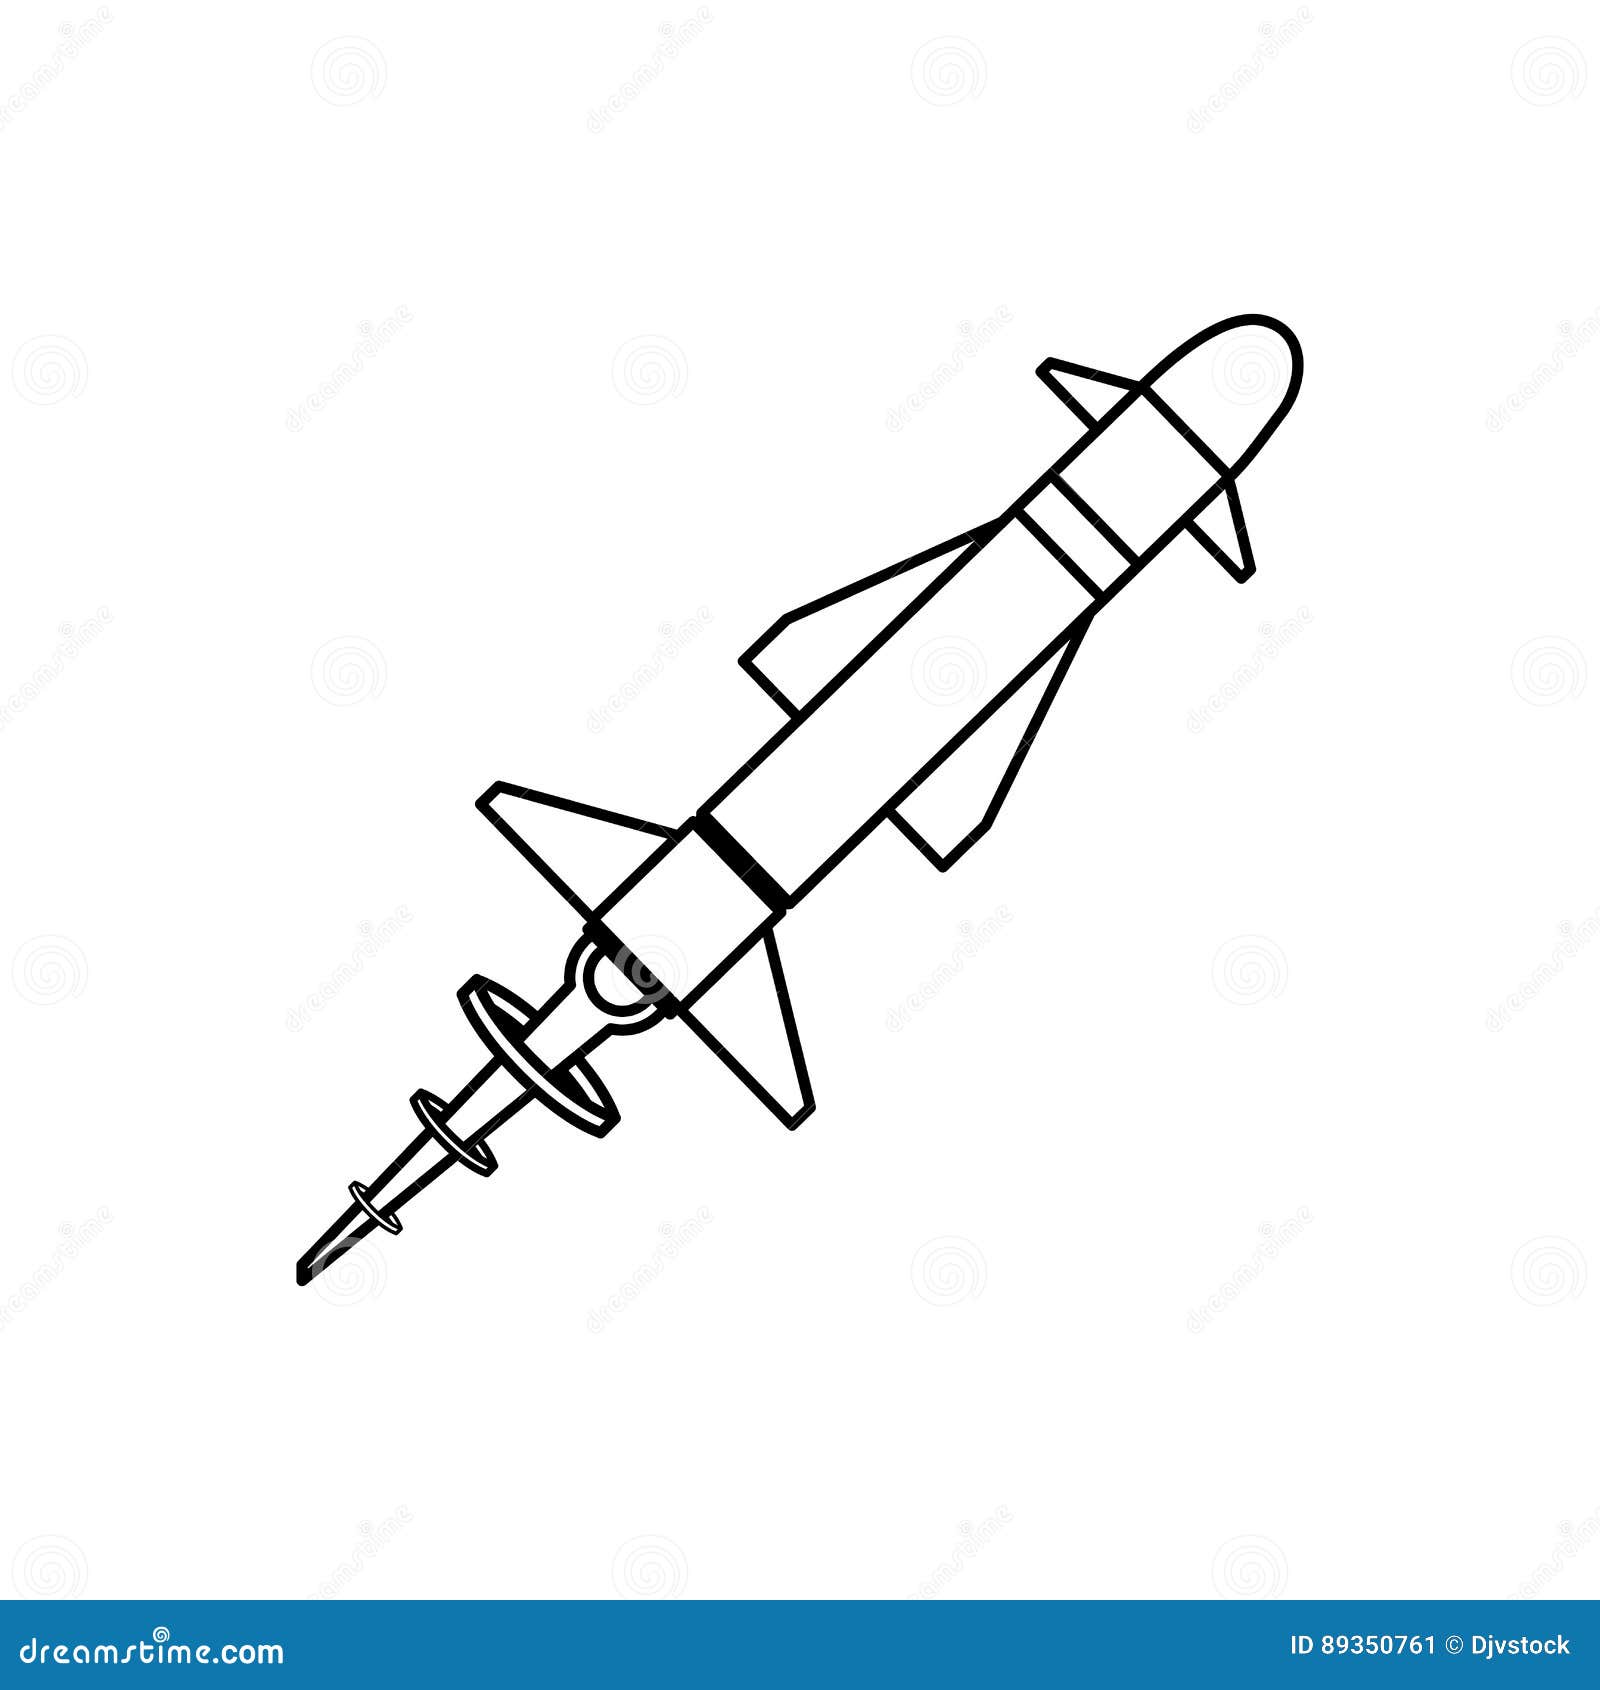 Missile rocket weapon stock illustration. Illustration of atomic - 89350761